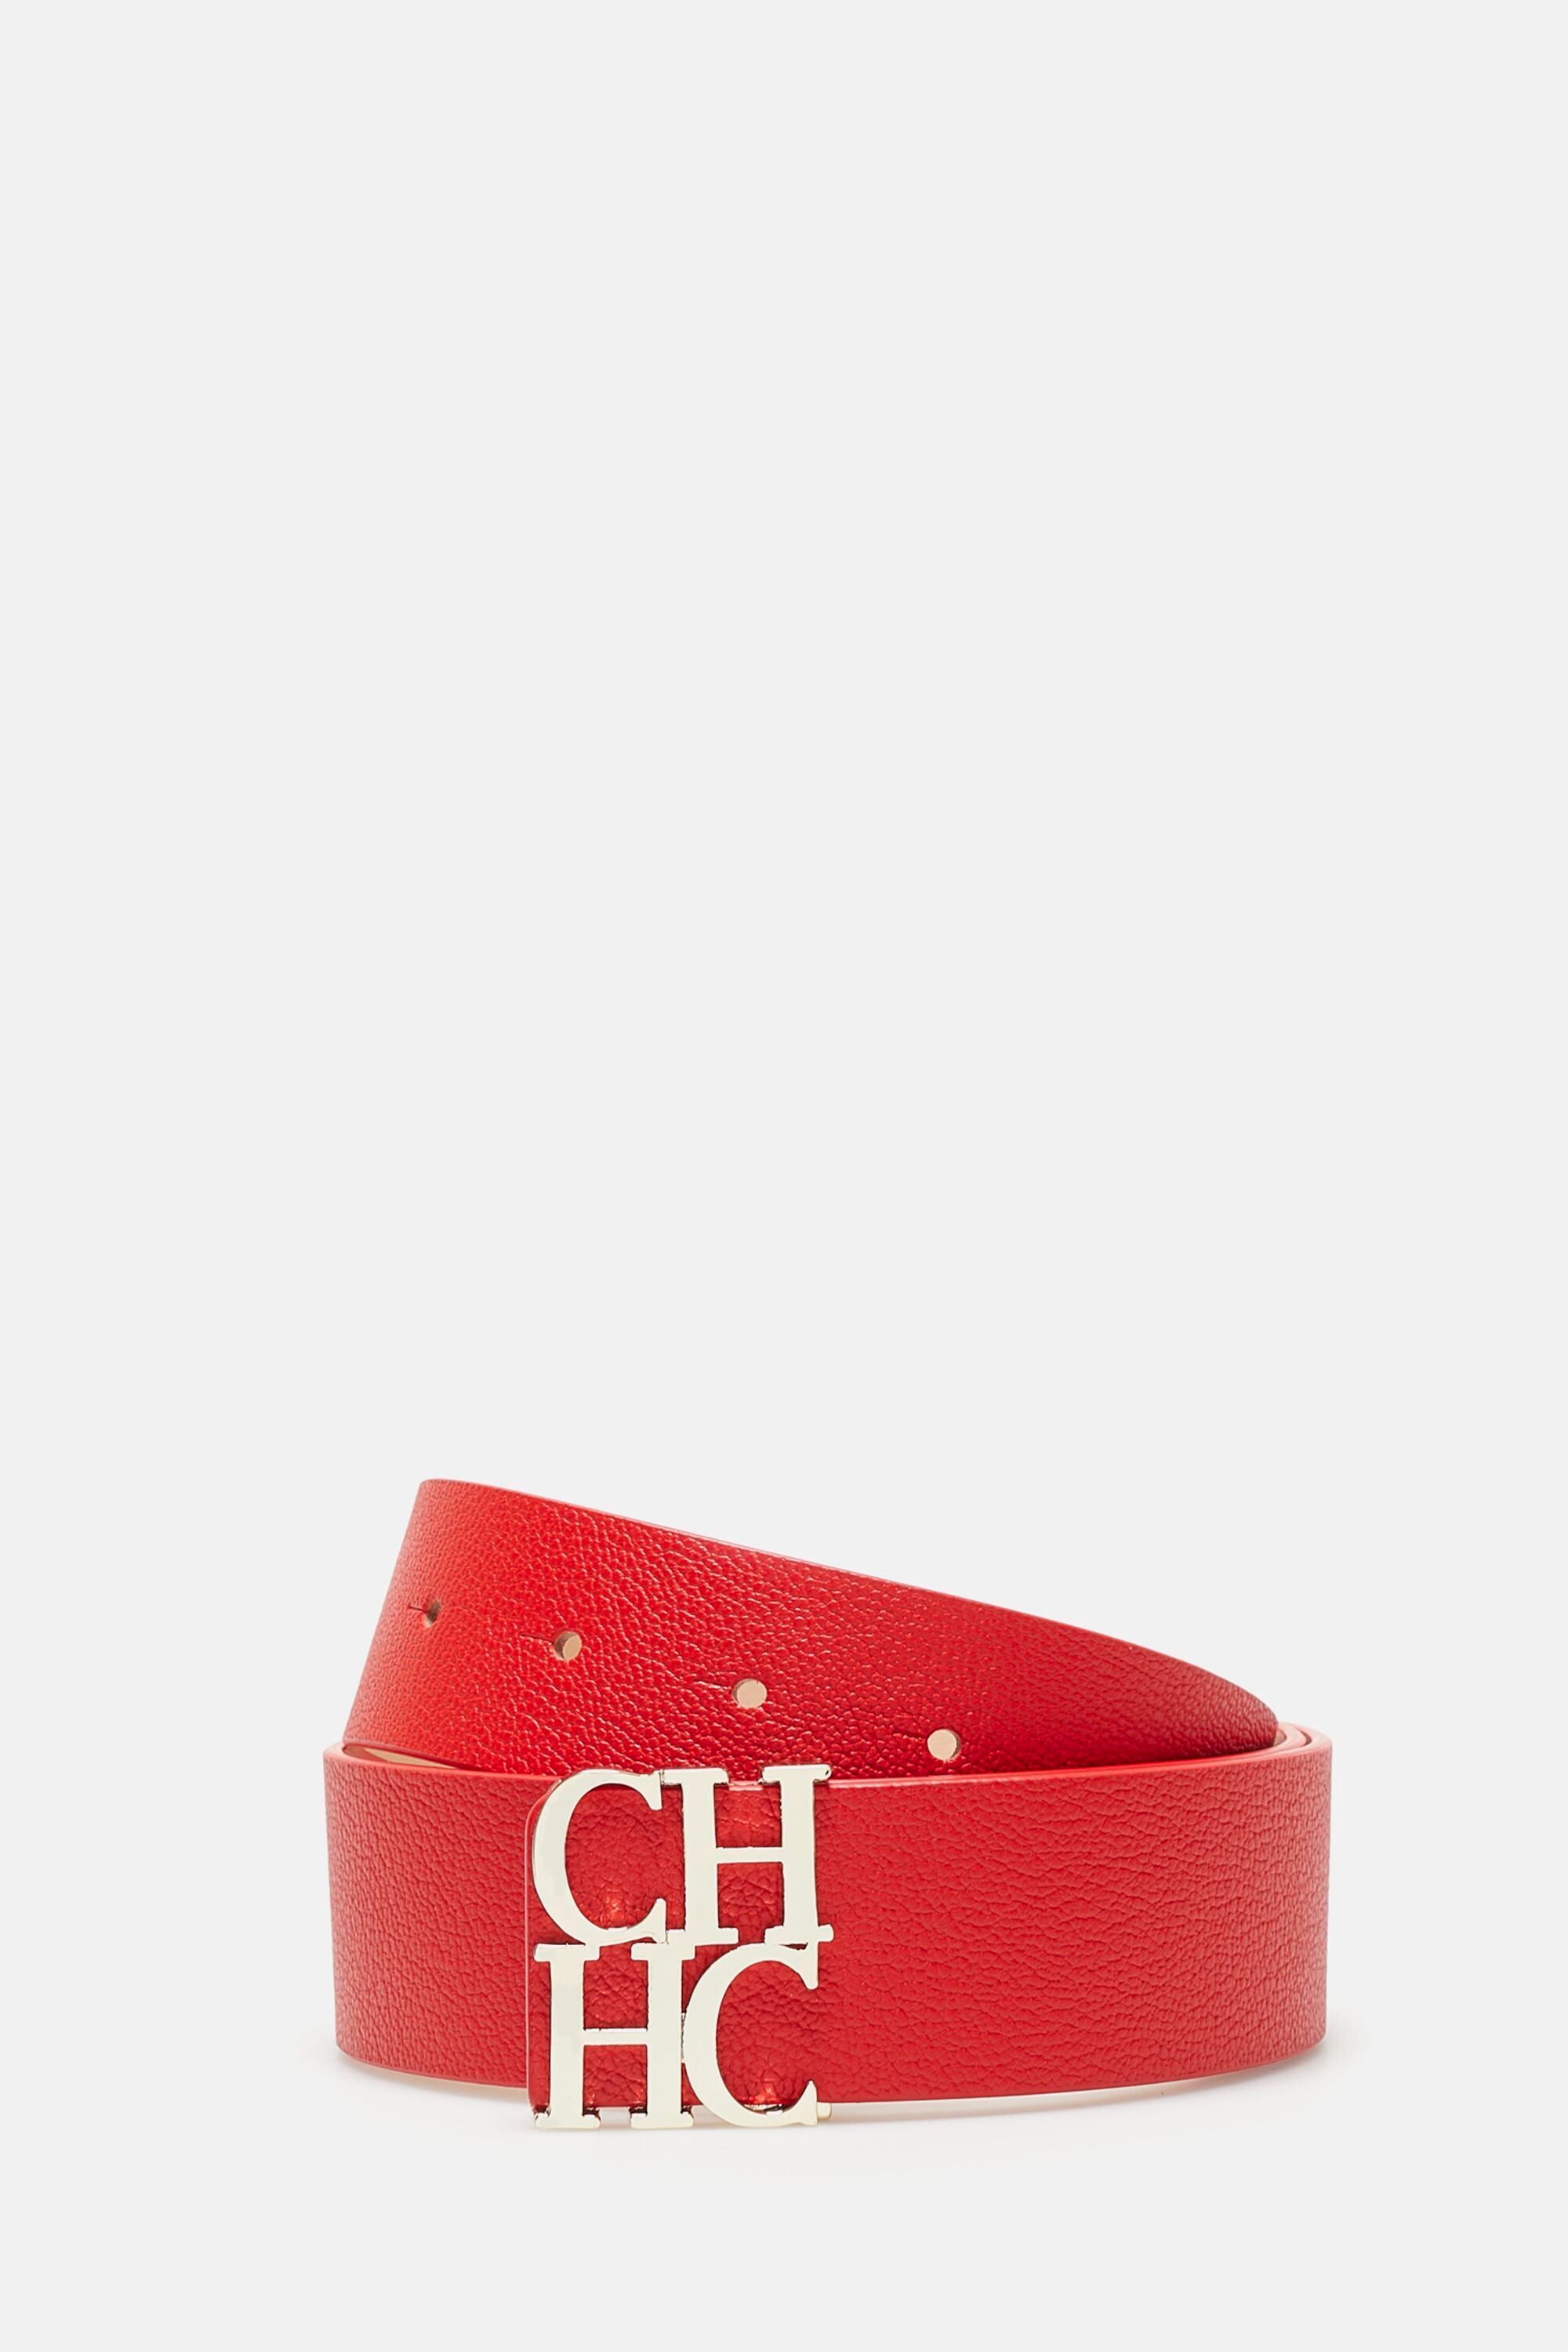 CHHC | ancho red - CH Herrera Unidos